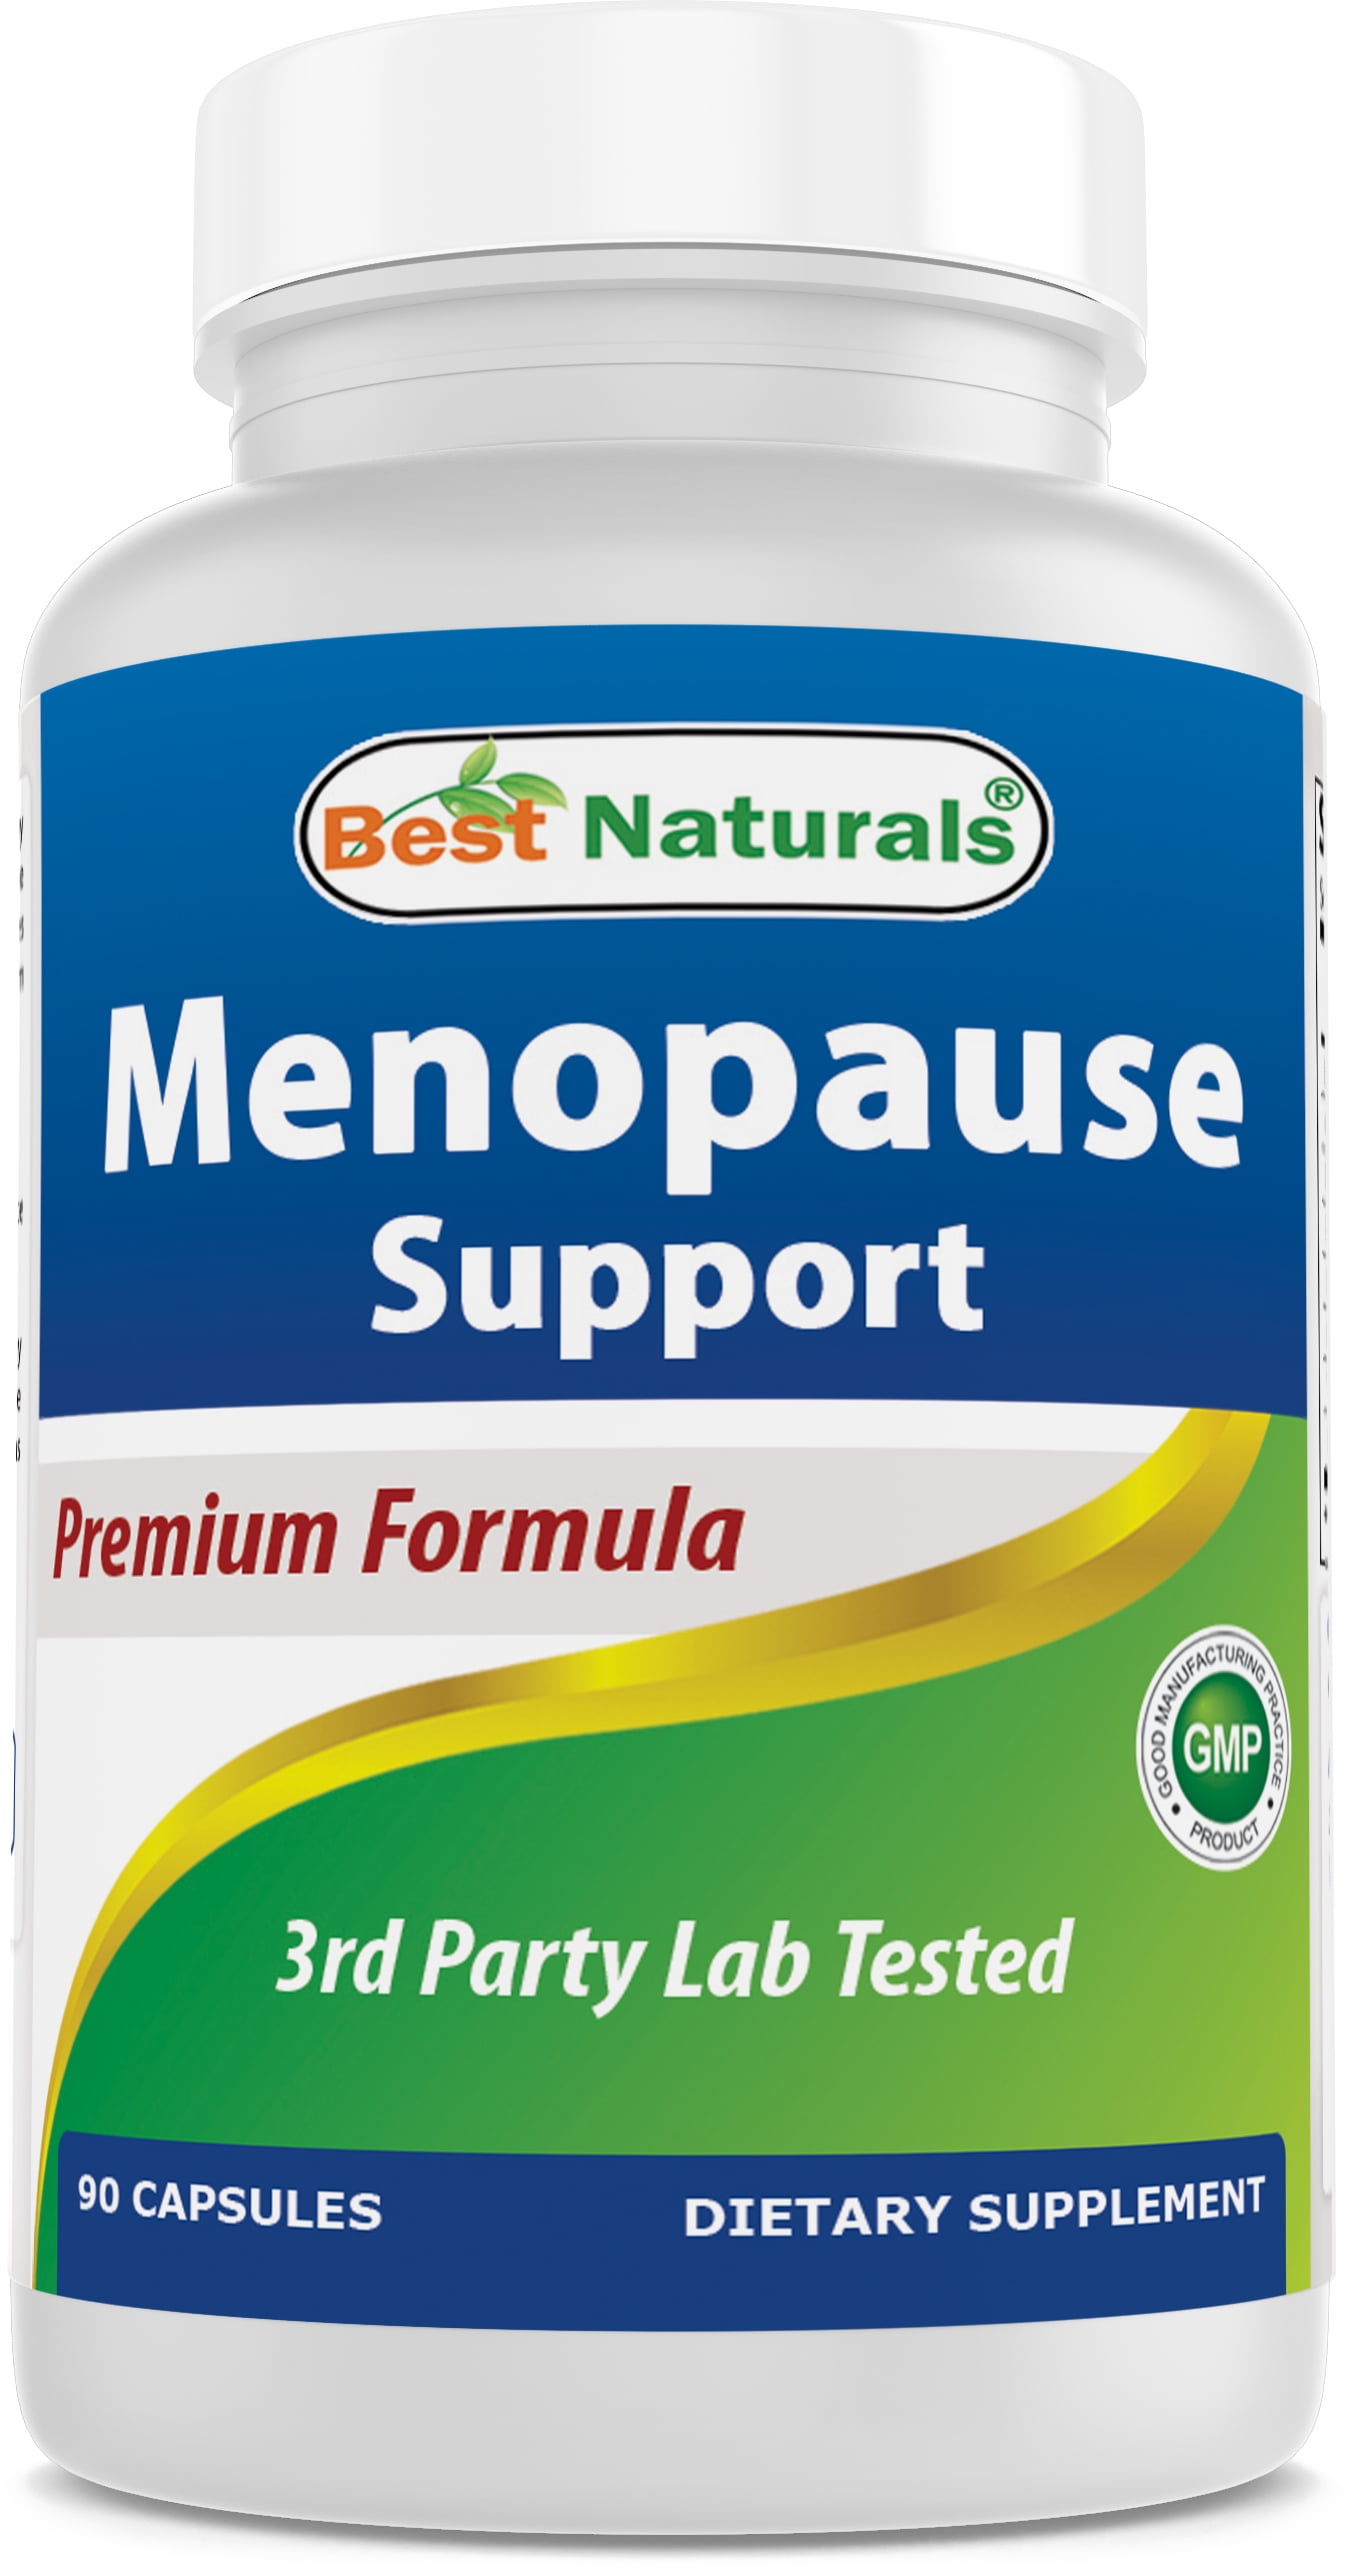 Menopause supplements